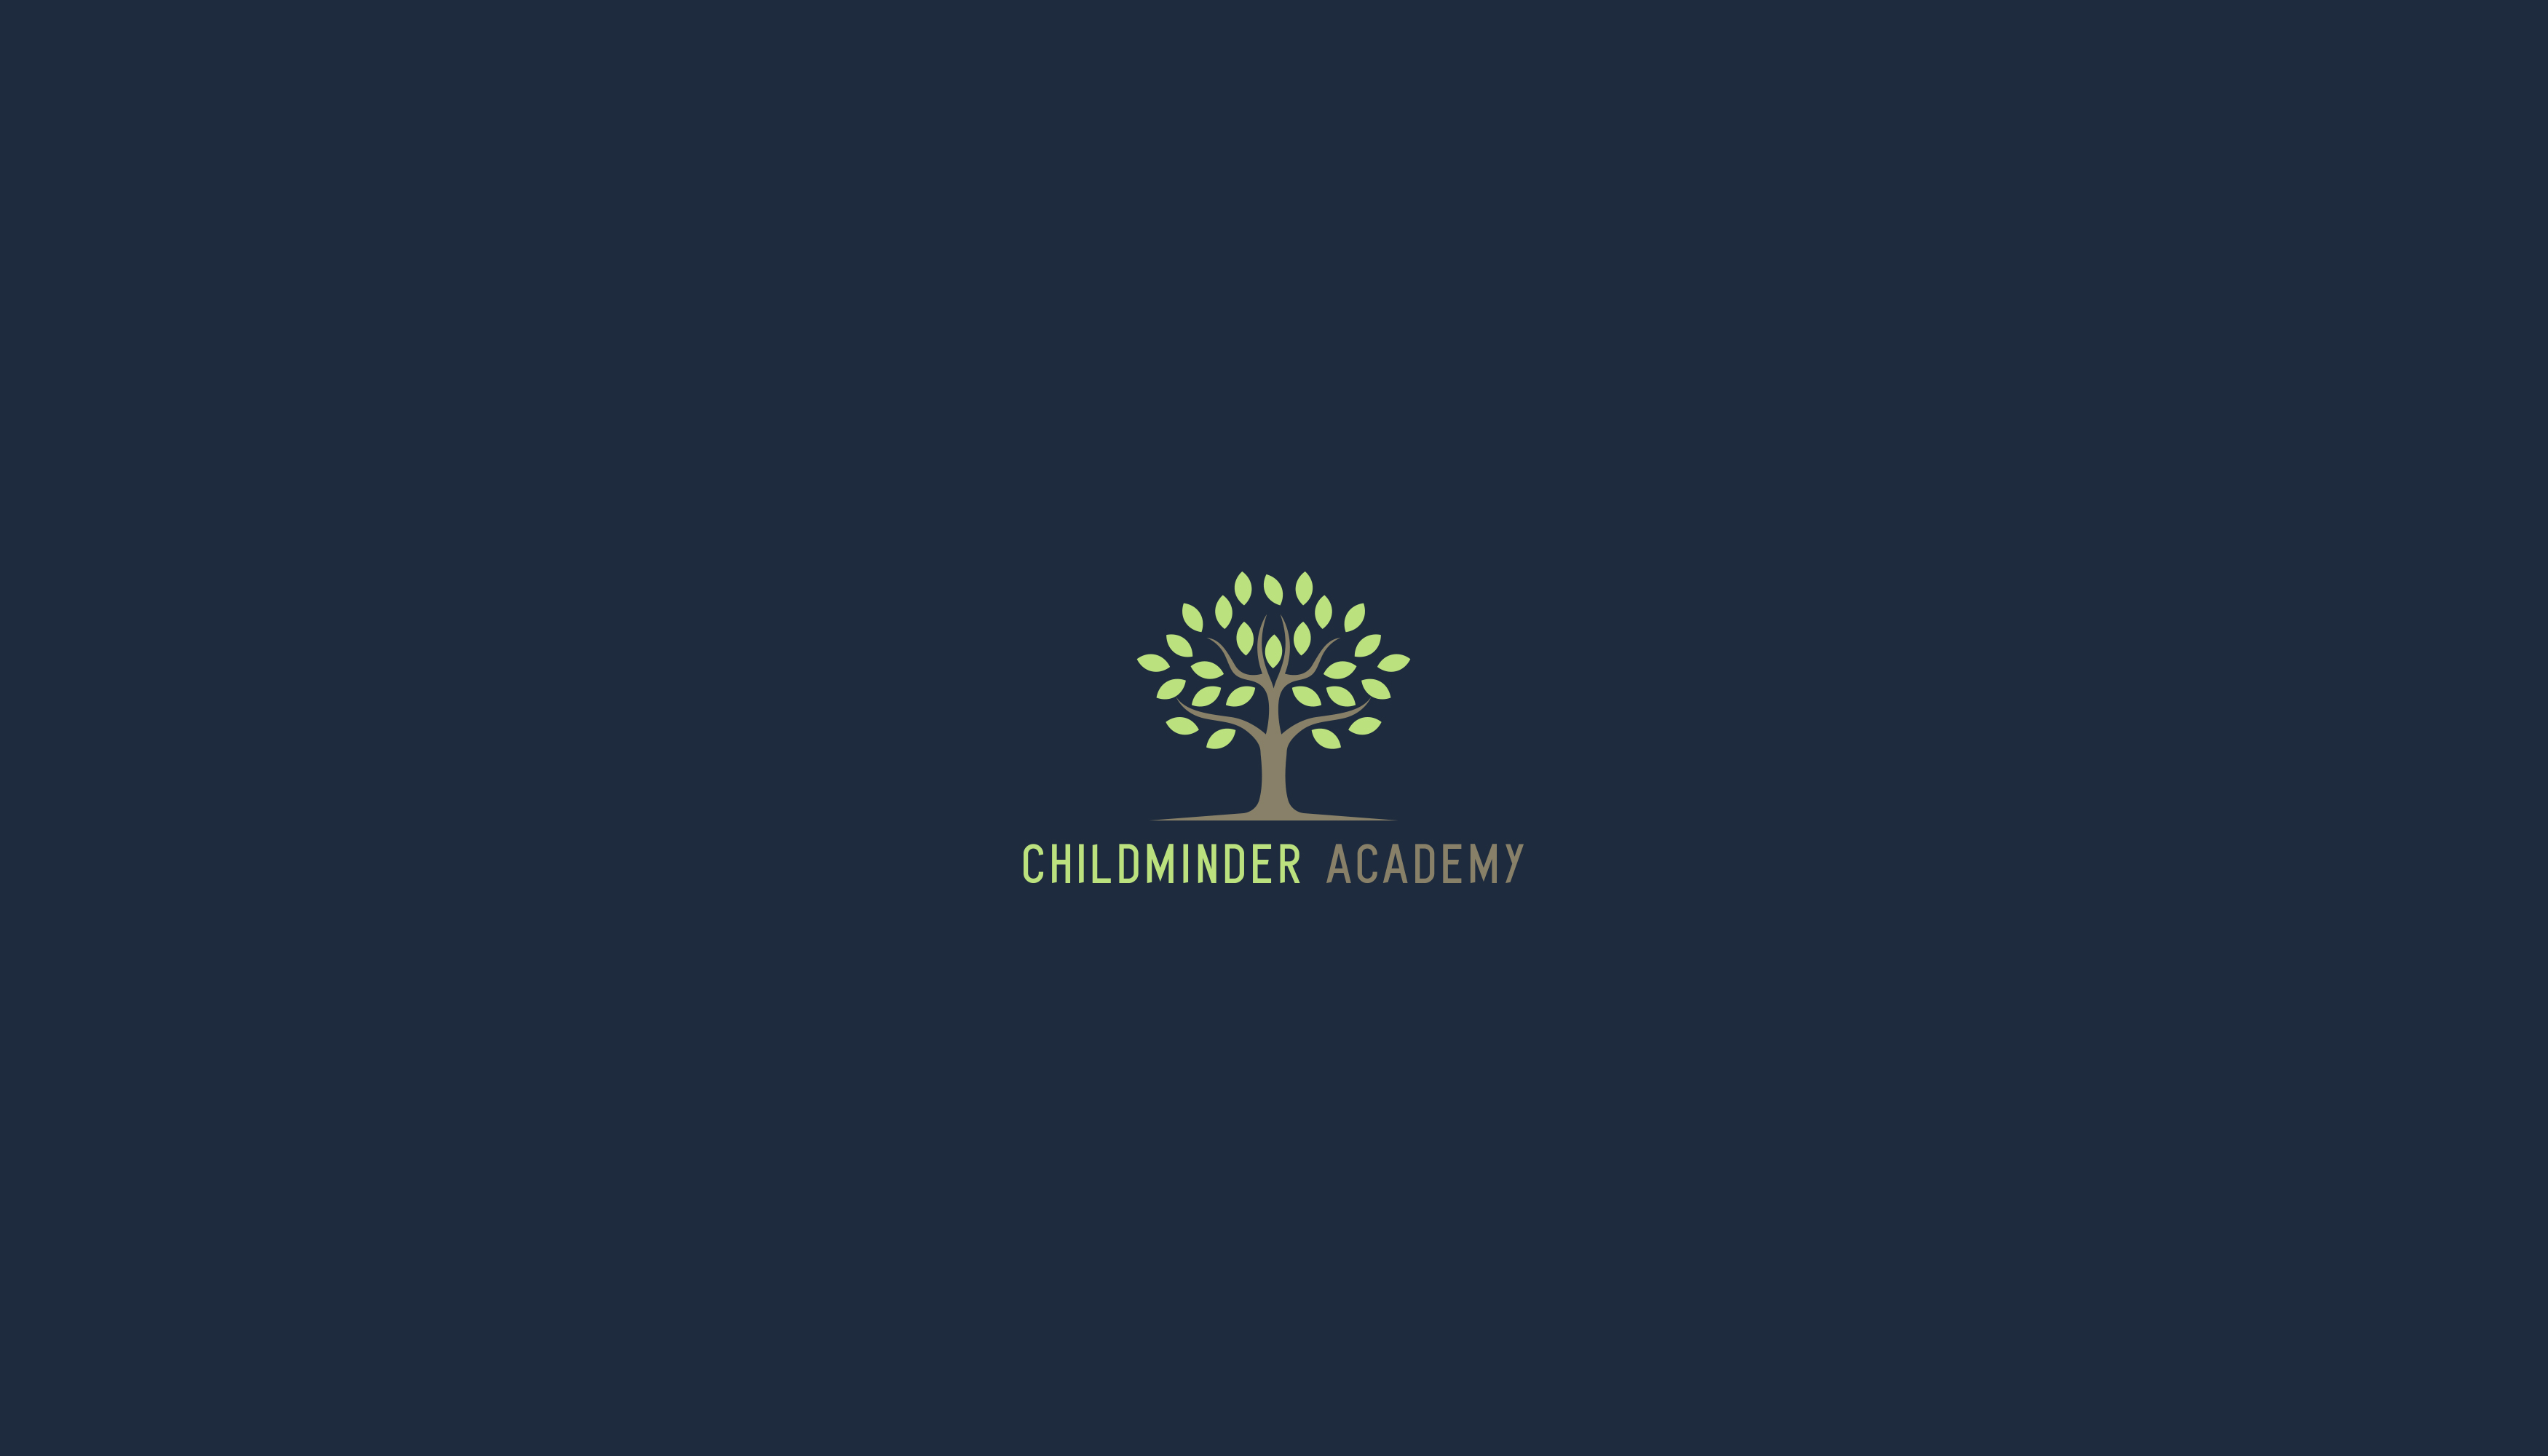 ChildMinder Academy Design #1